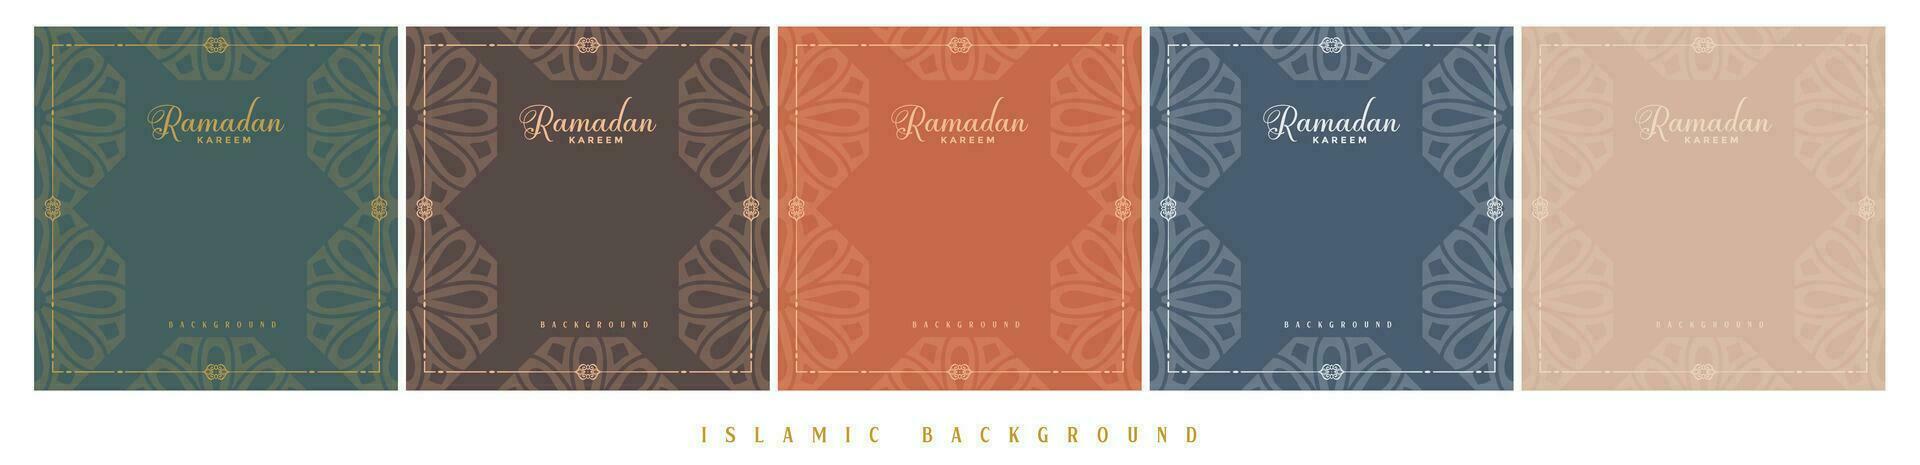 mooi Ramadan kareem traditioneel festival kaart en sociaal media achtergrond vector